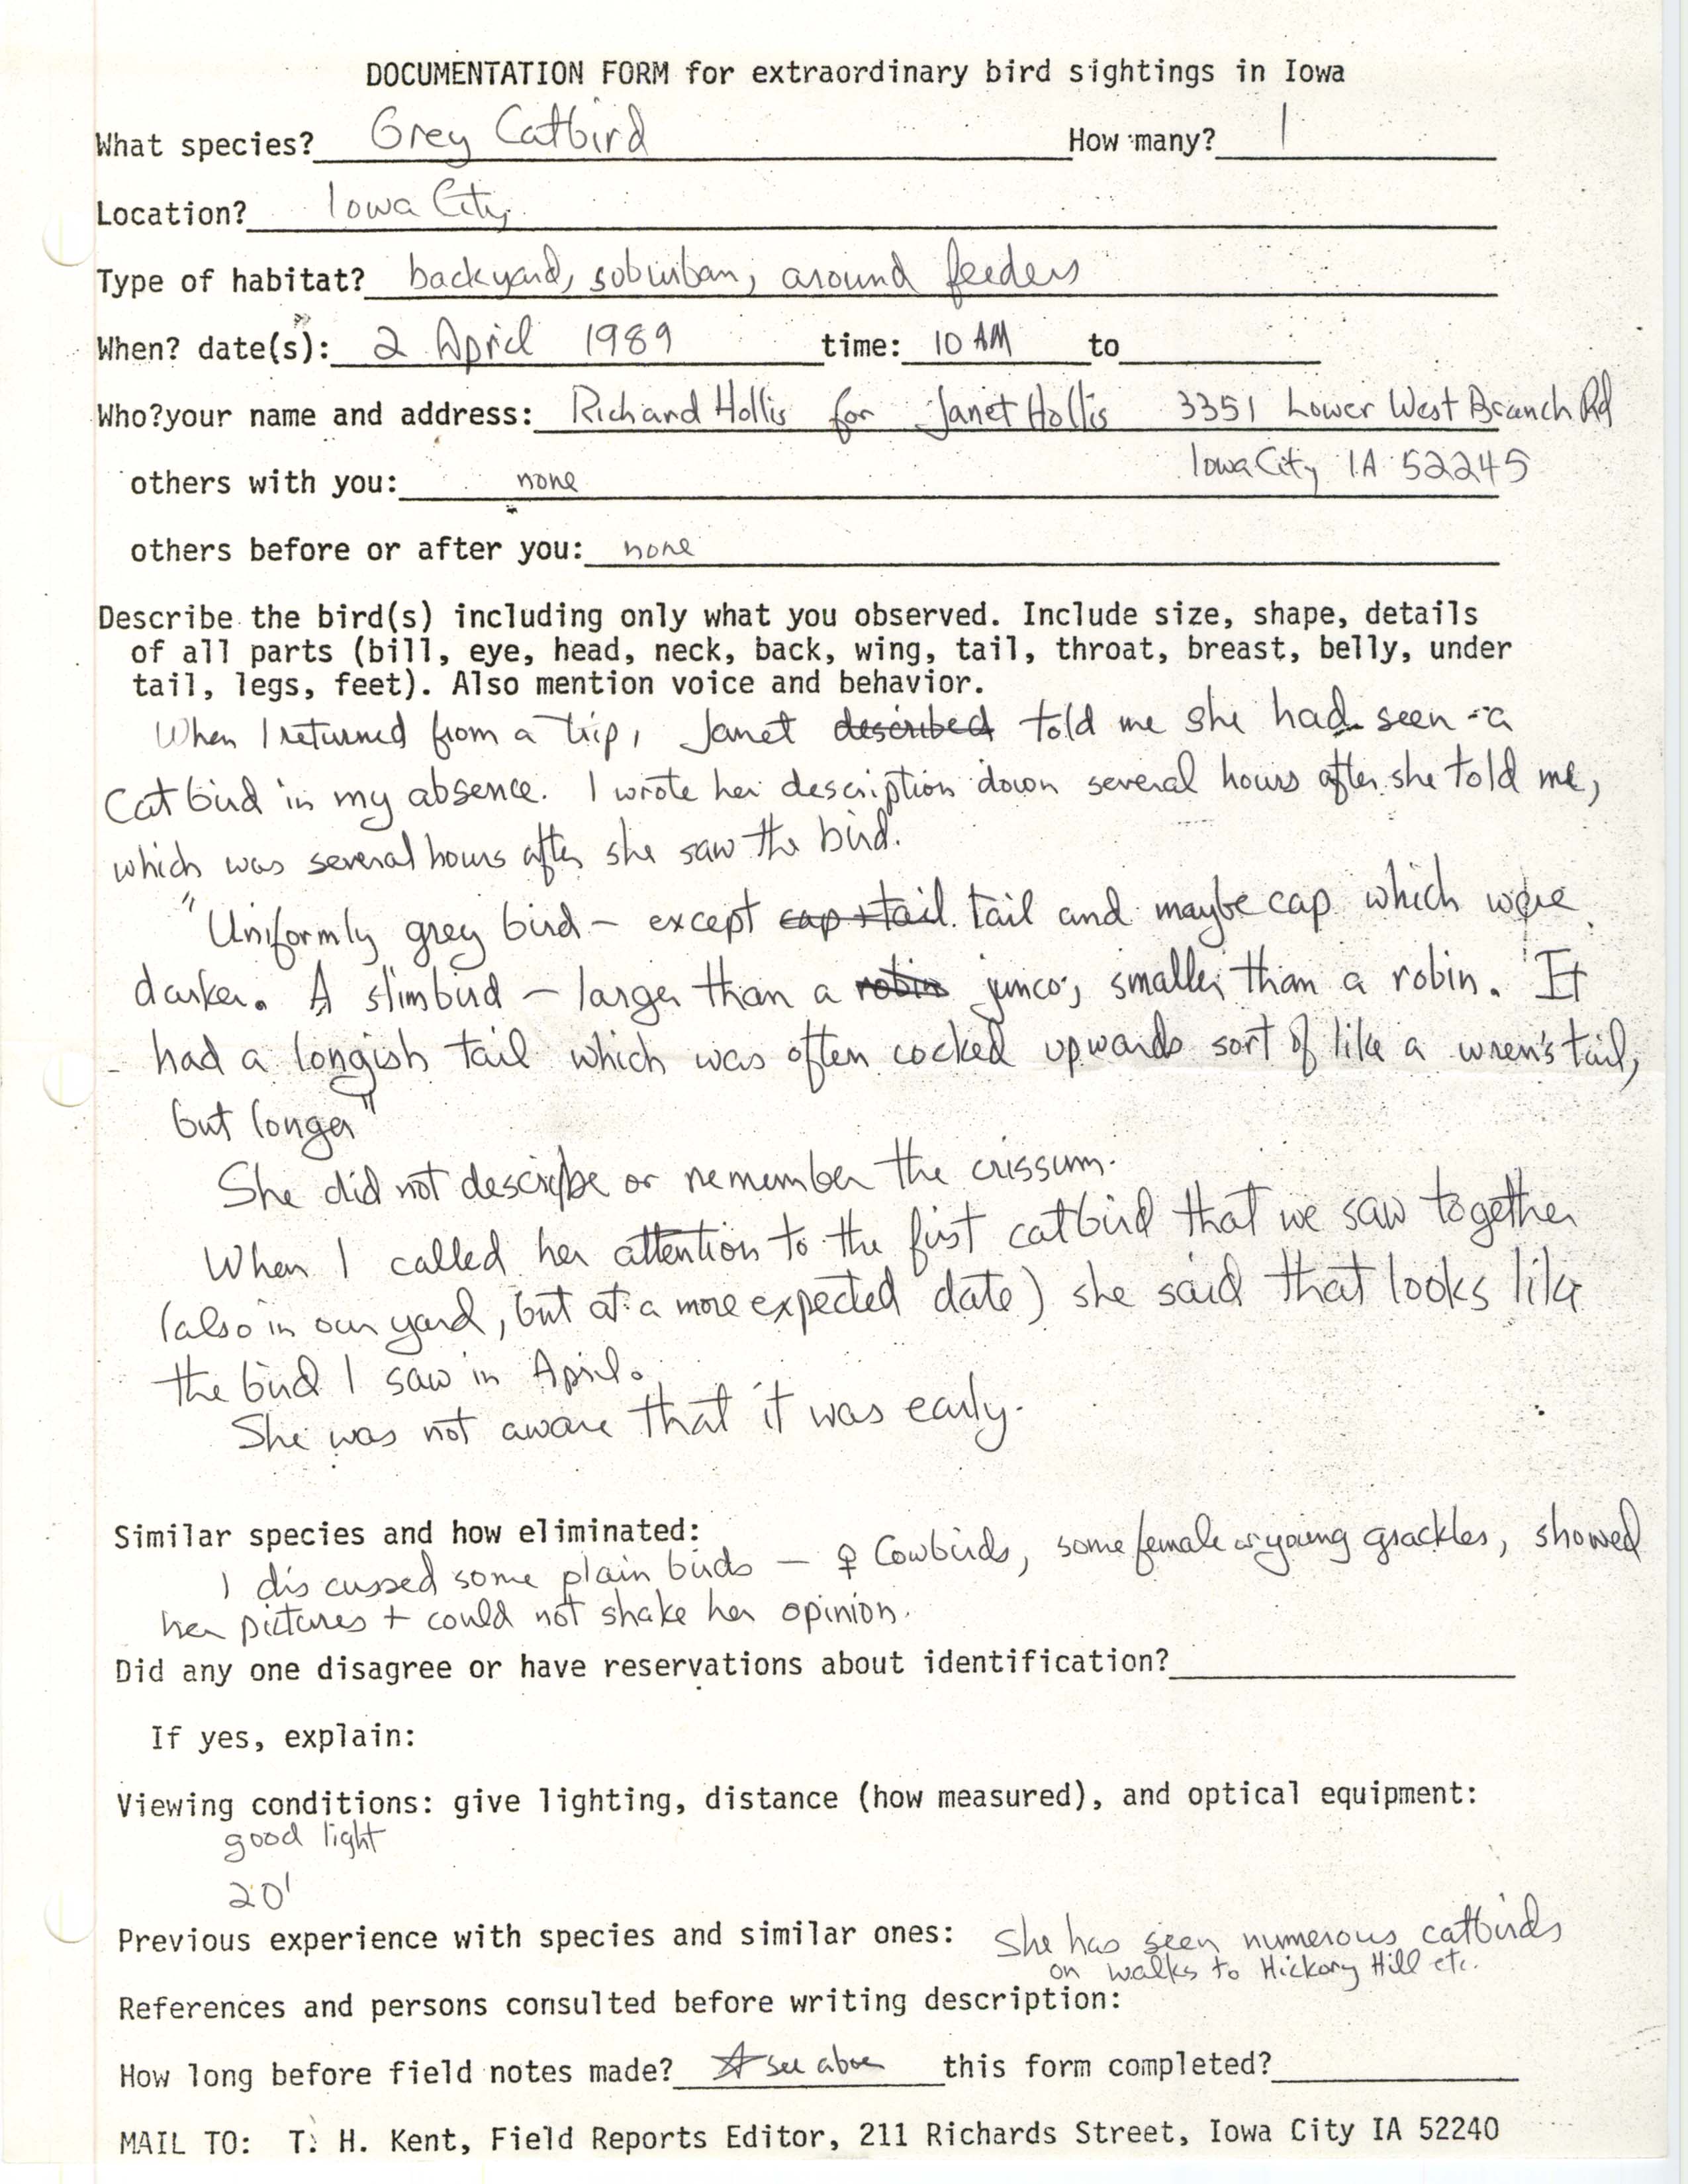 Rare bird documentation form for Gray Catbird at Iowa City, 1989